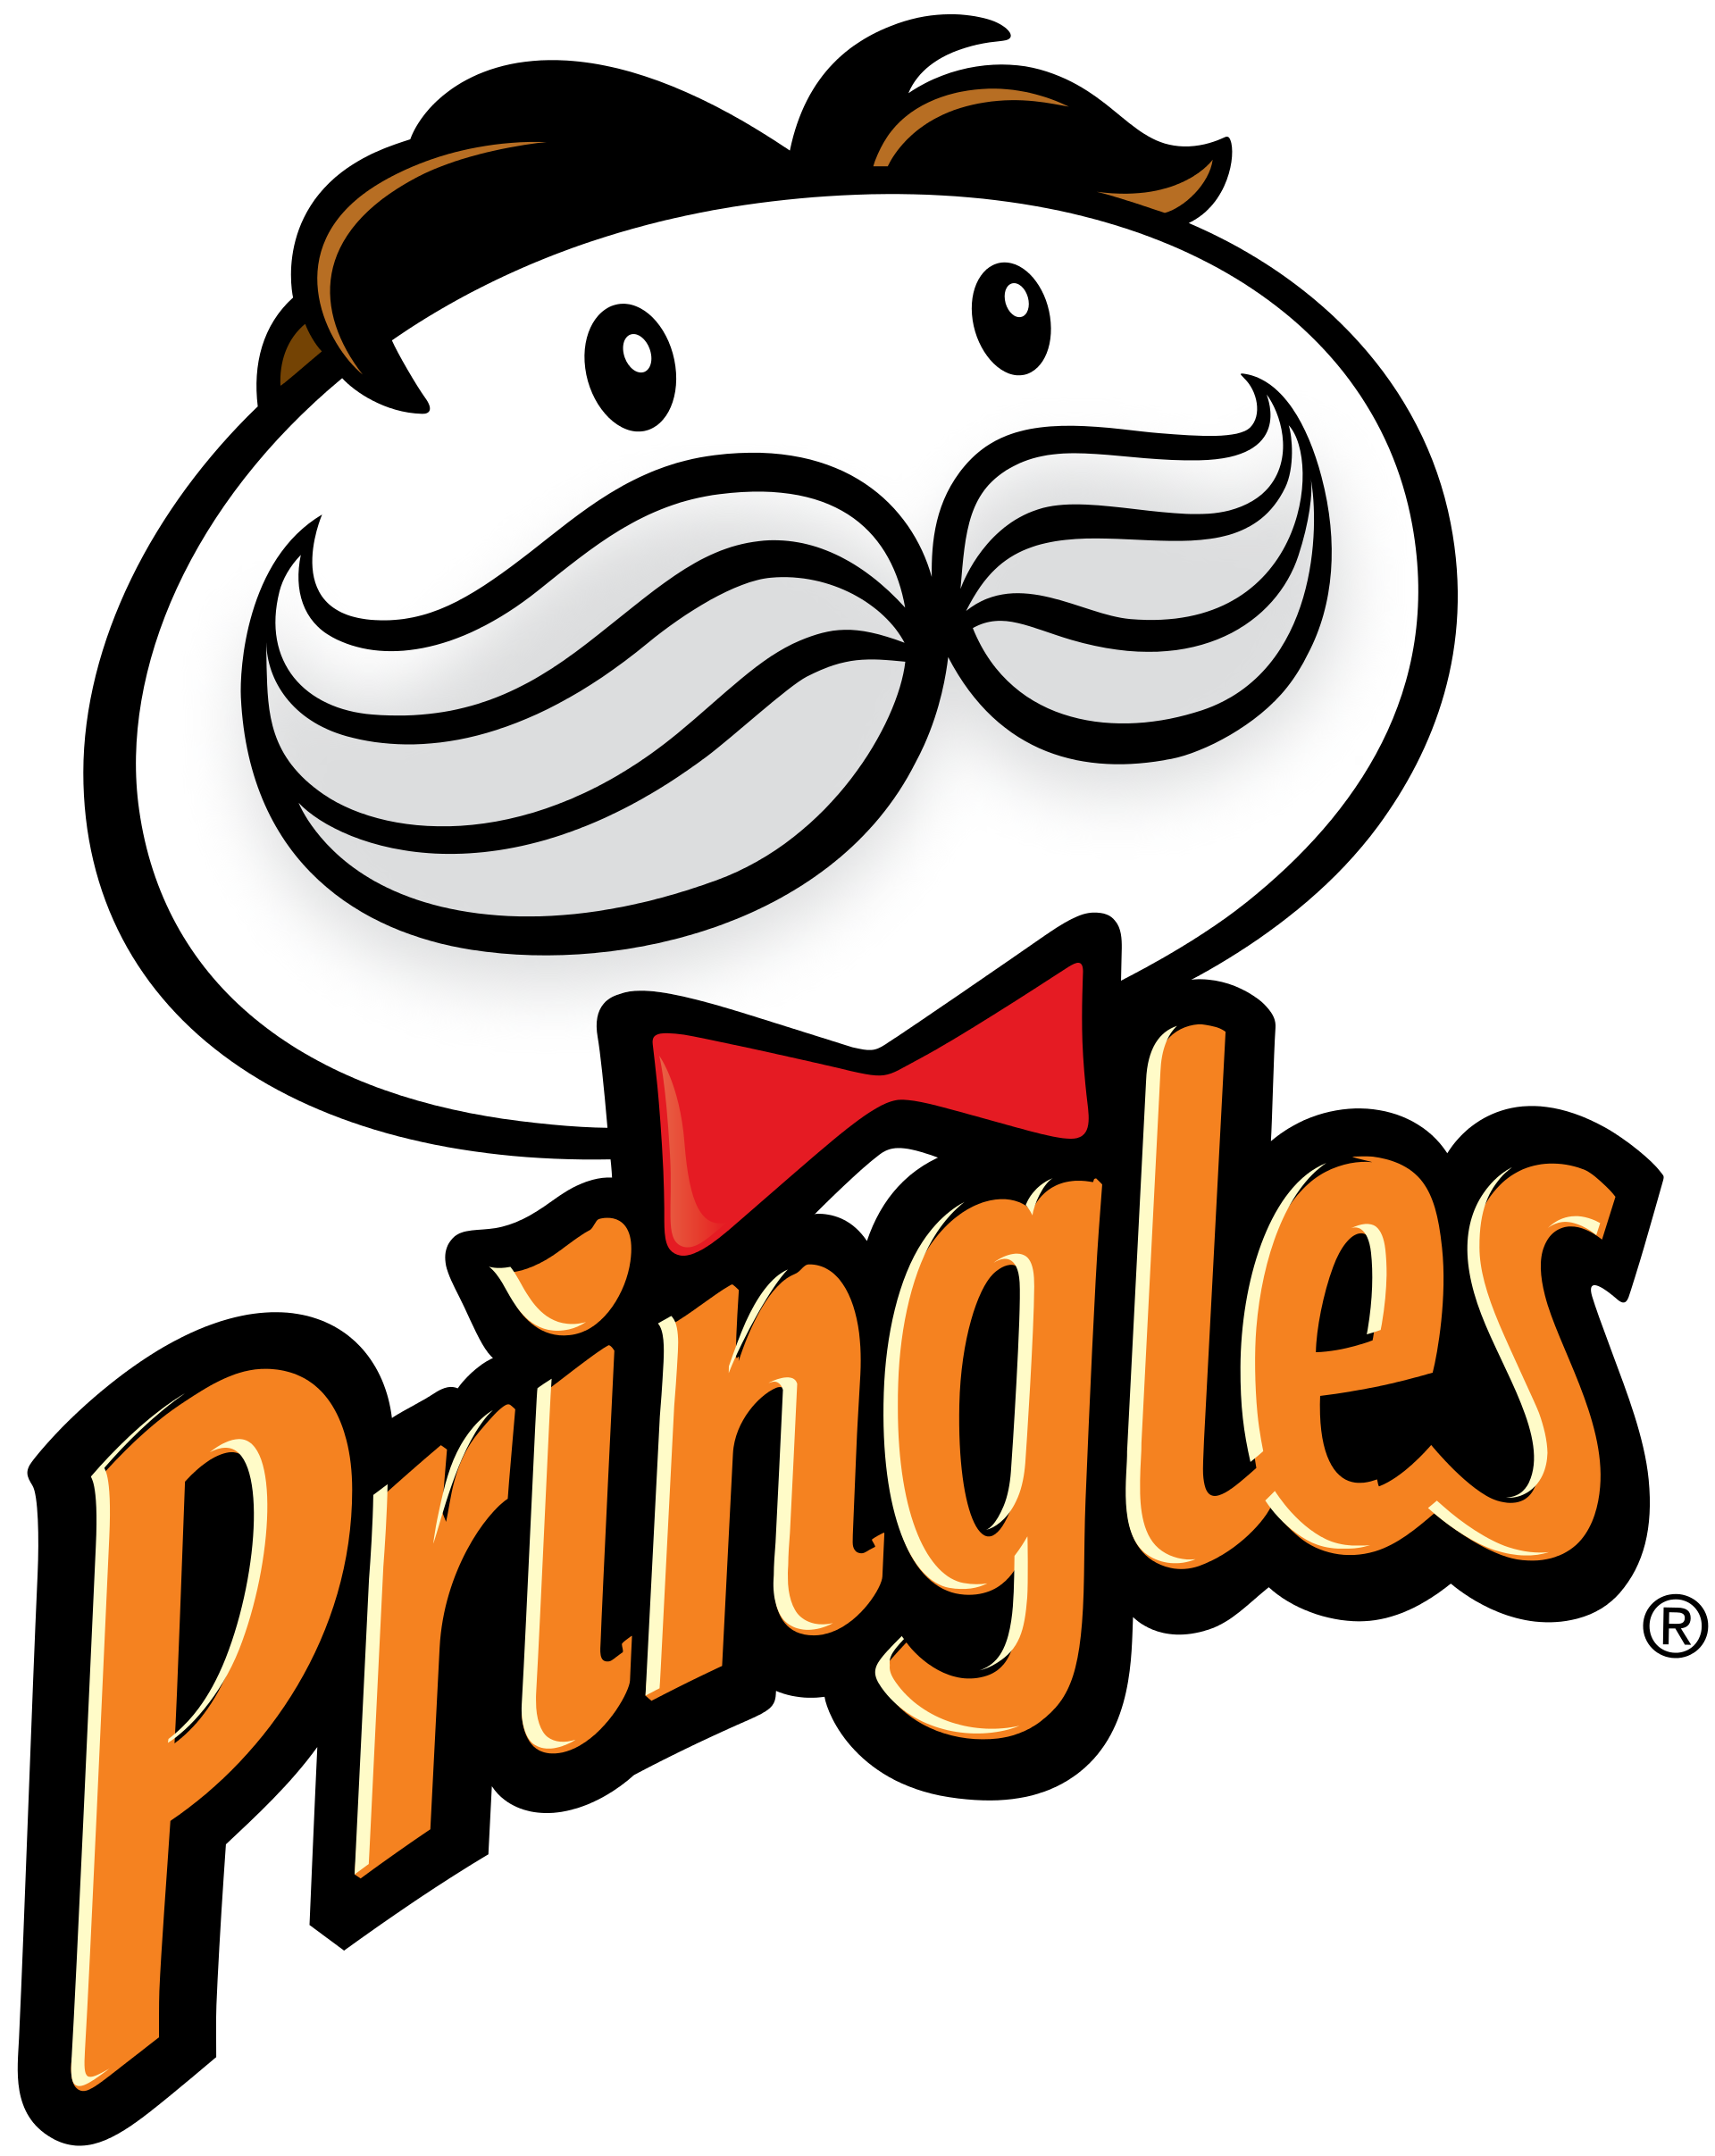 Pringles Logo Png, Transparent Png - Kindpng 3A6